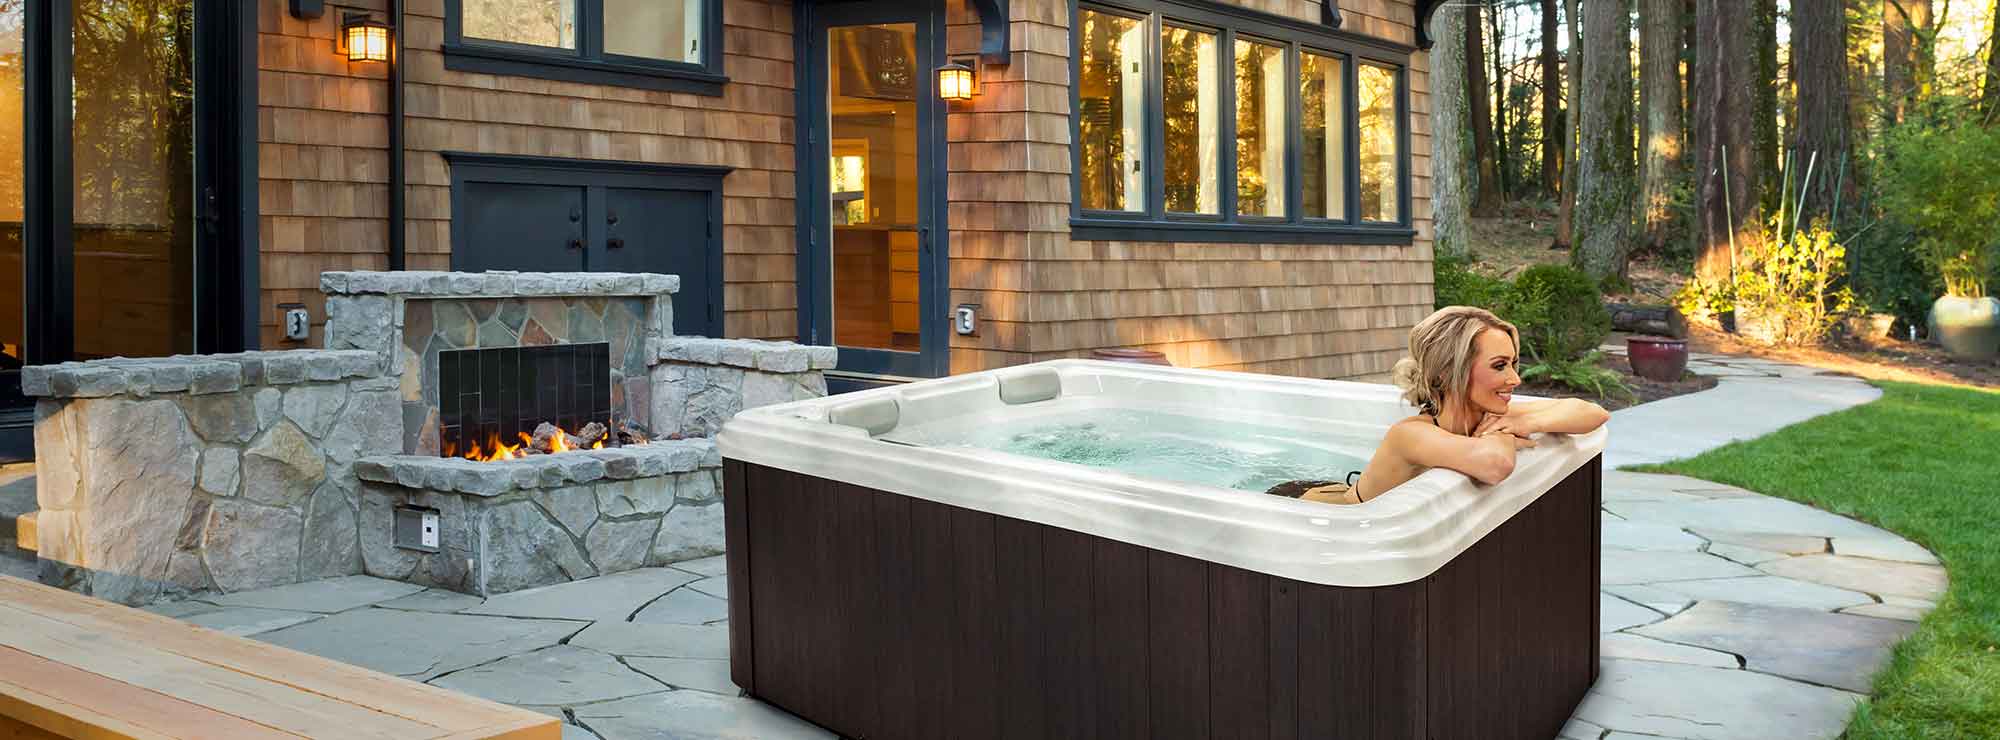 Garden Wisteria Spa & Hot Tub | Great Backyard Place